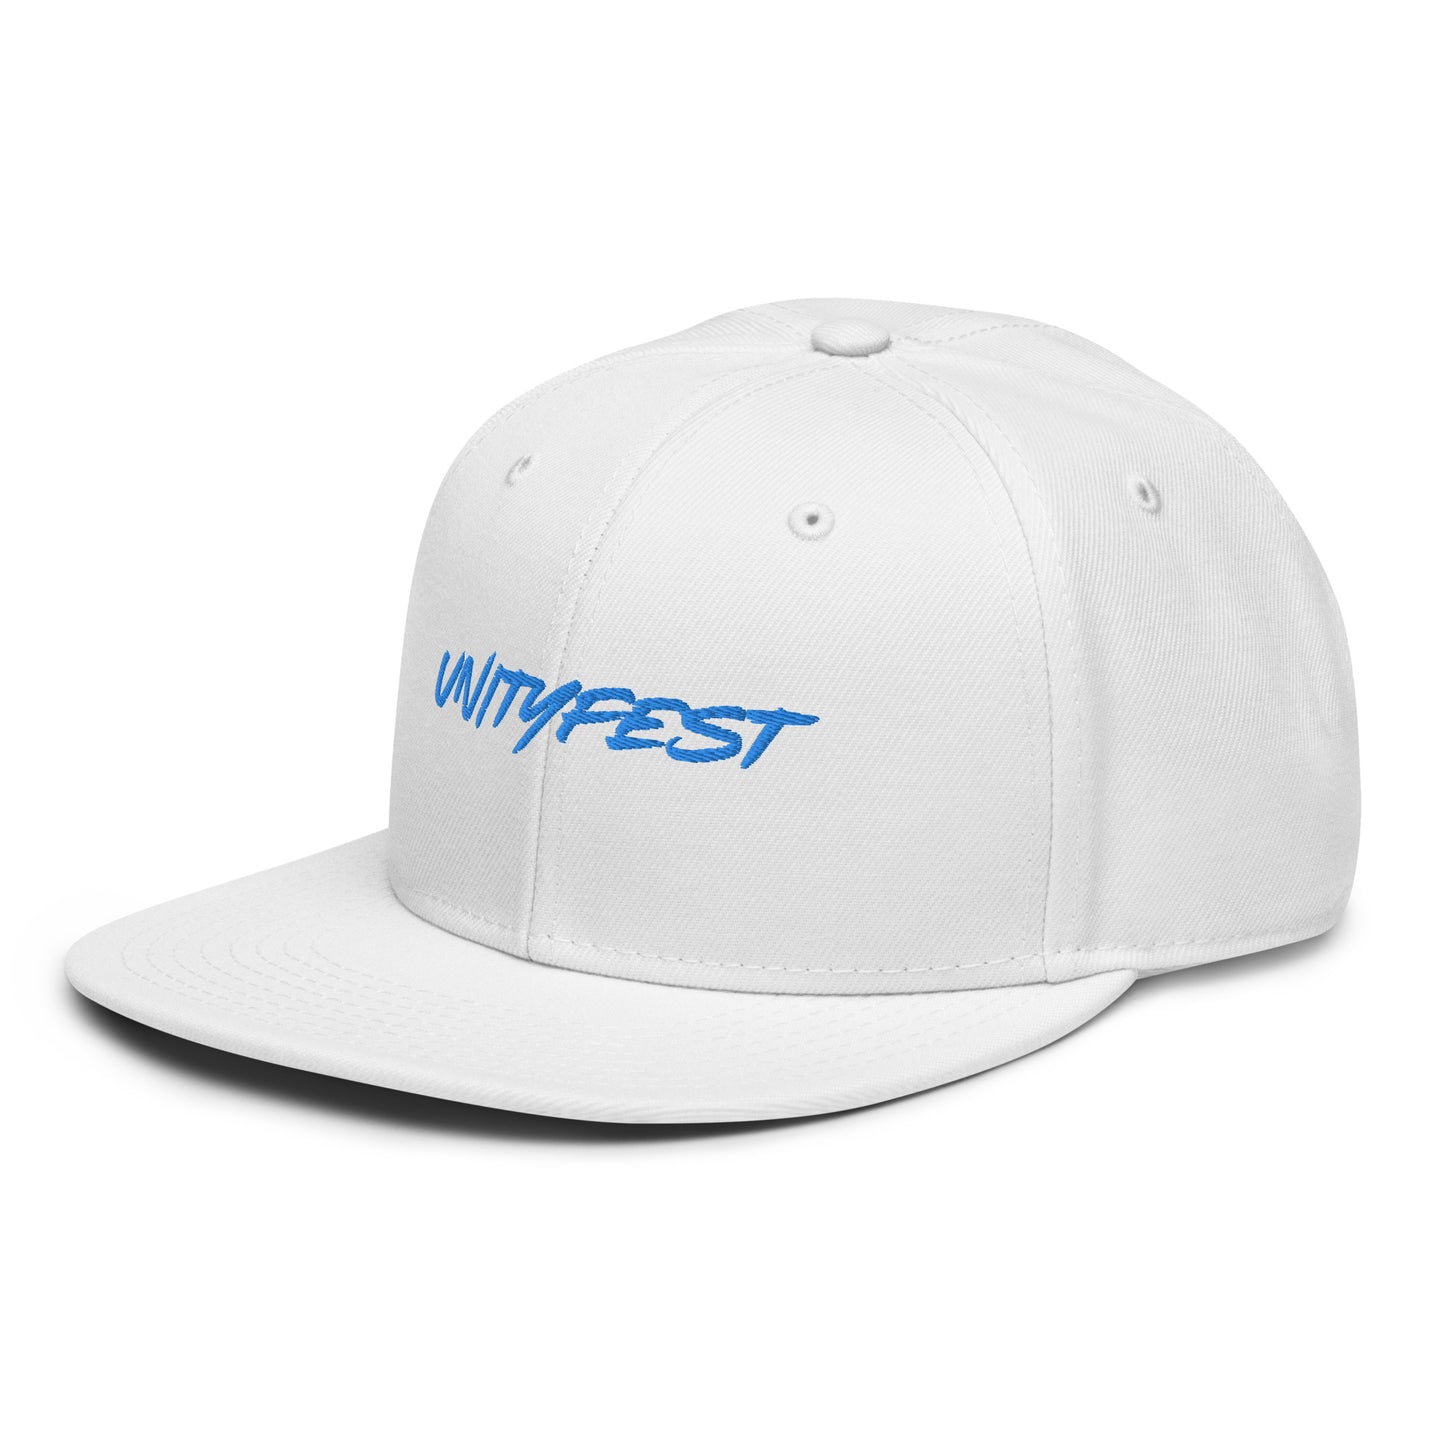 Unityfest Hyperwave Snapback Hat